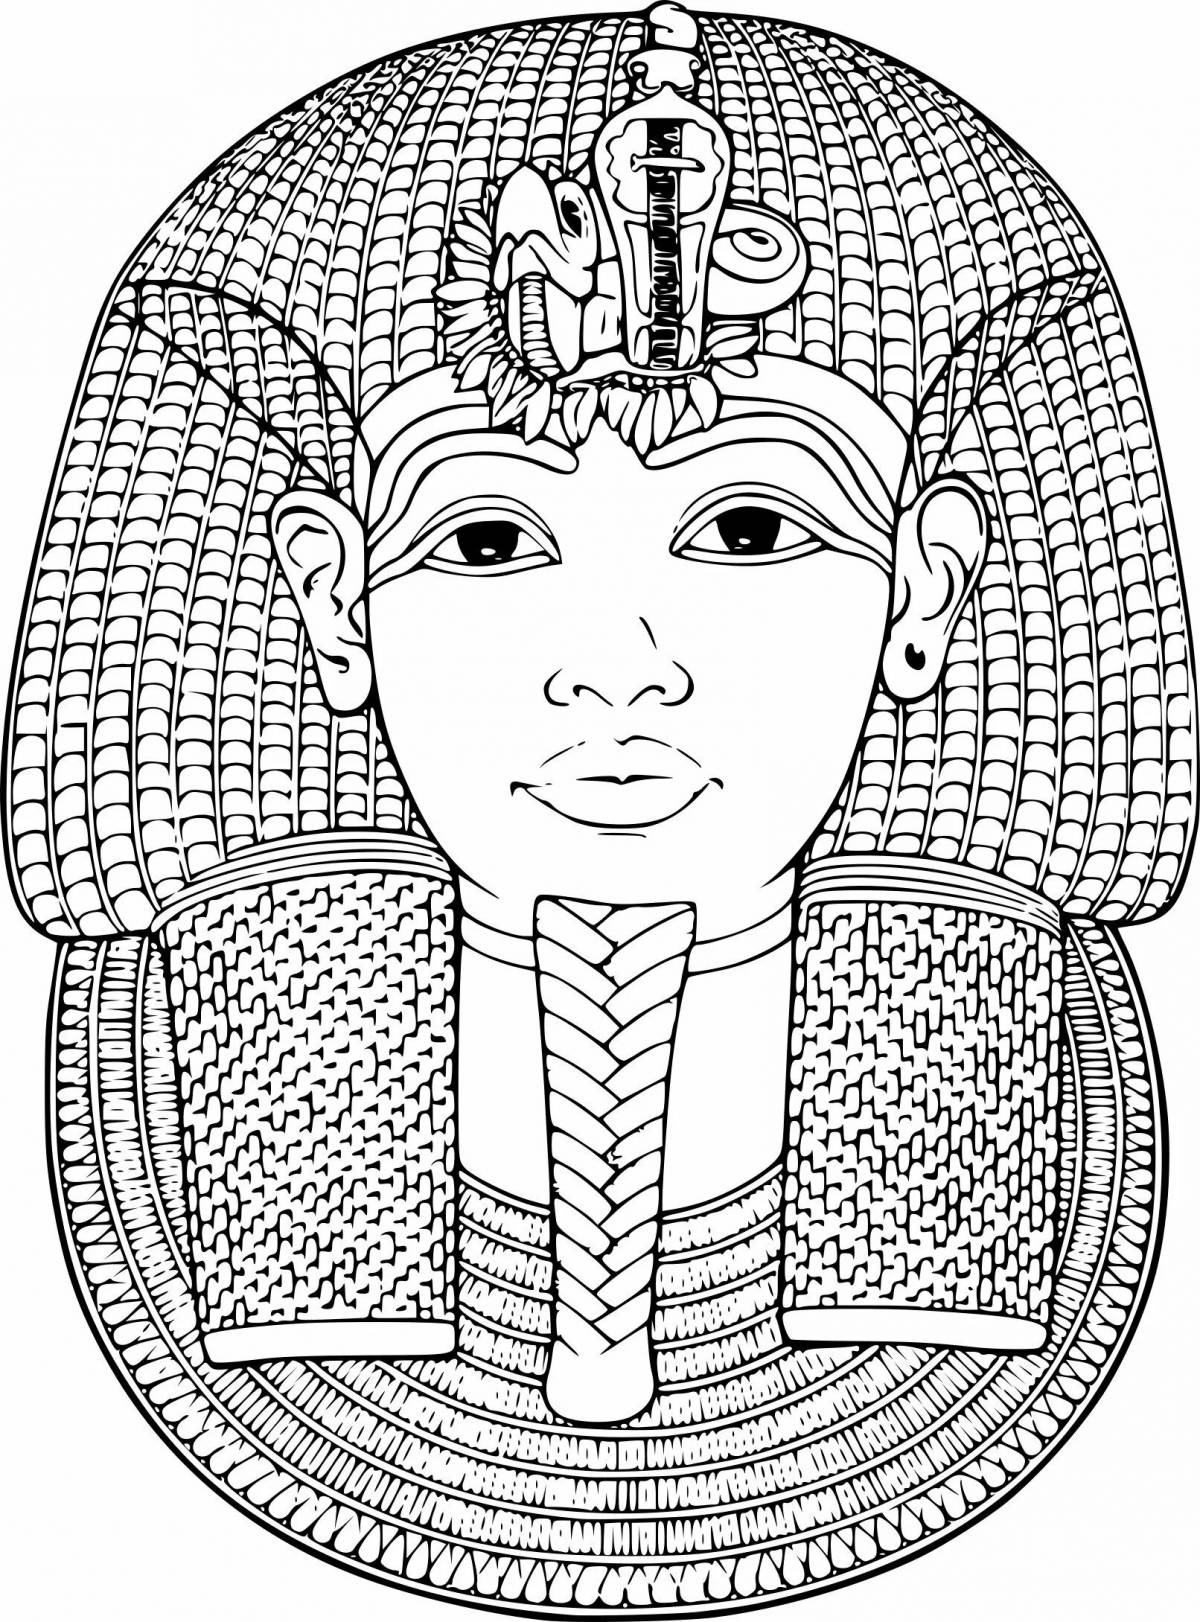 Mask of the pharaoh tutankhamen from class 5 #7